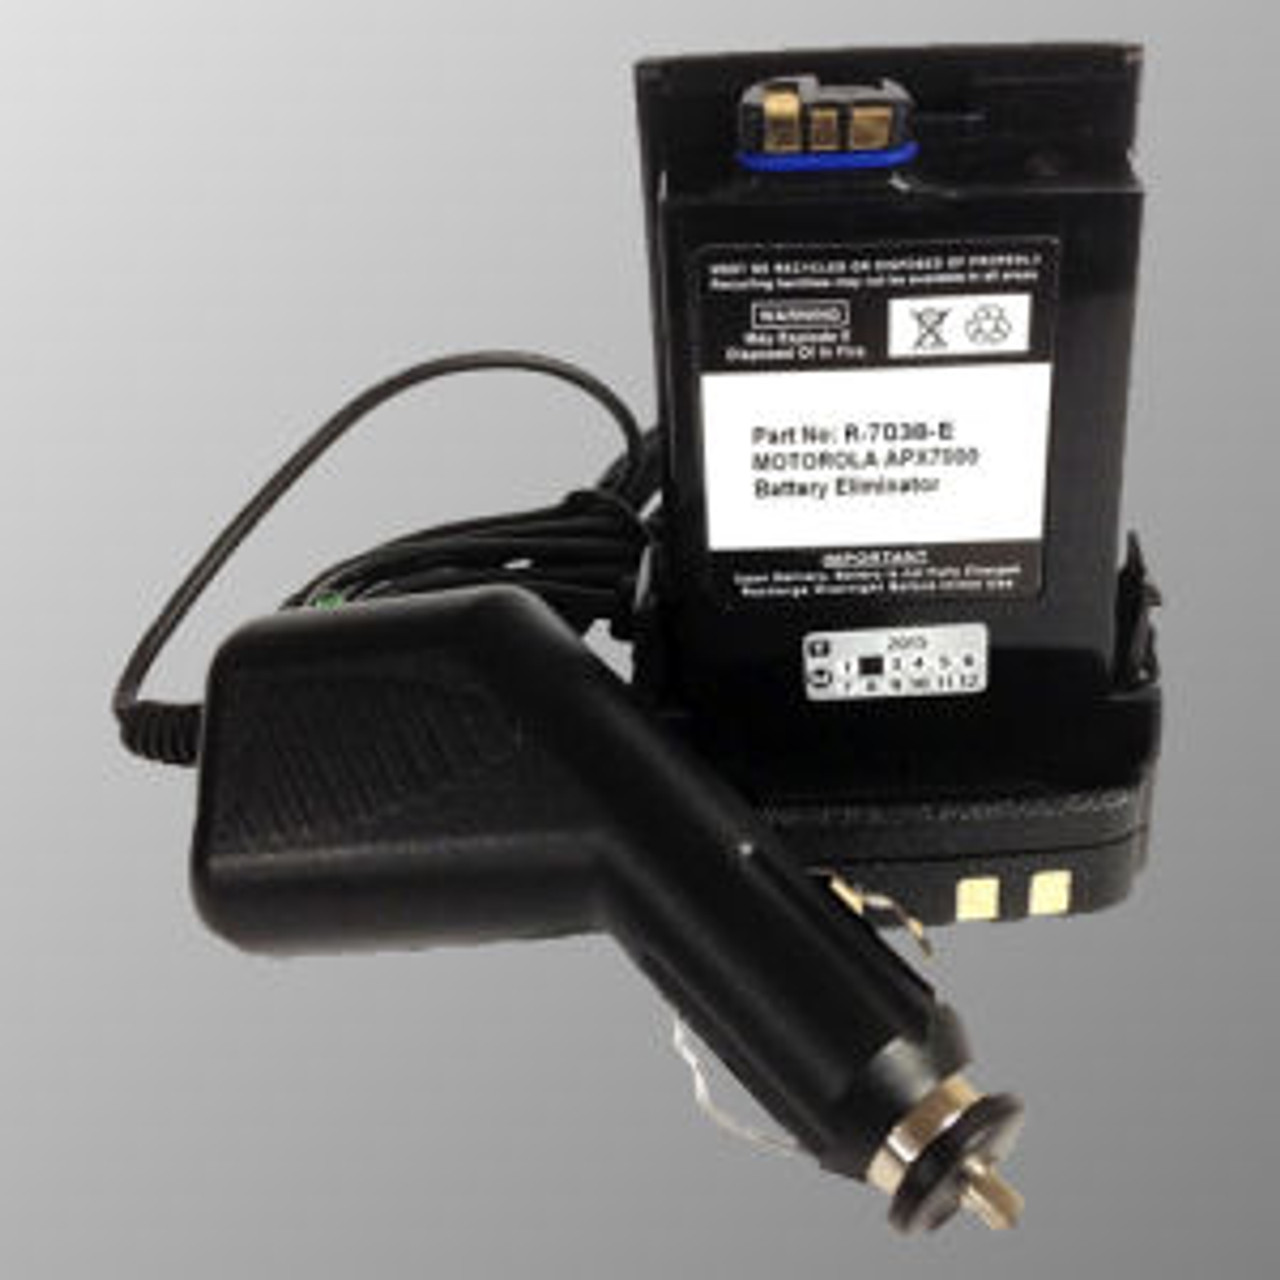 Motorola APX7000XE Battery Eliminator - 12VDC Cig Plug